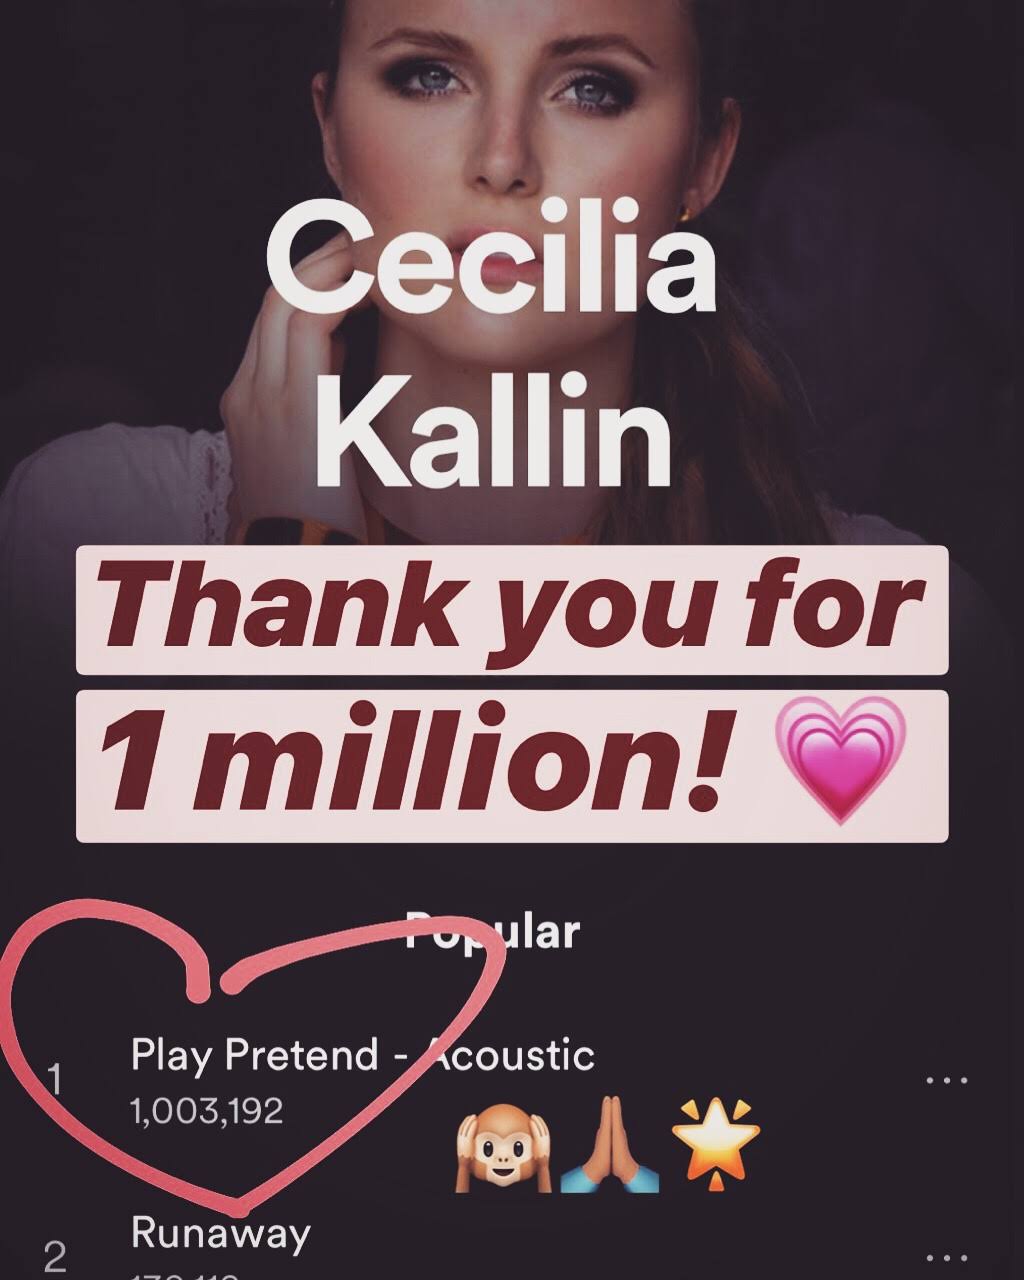 Thank-you-for-one-million-cecilia-kallin